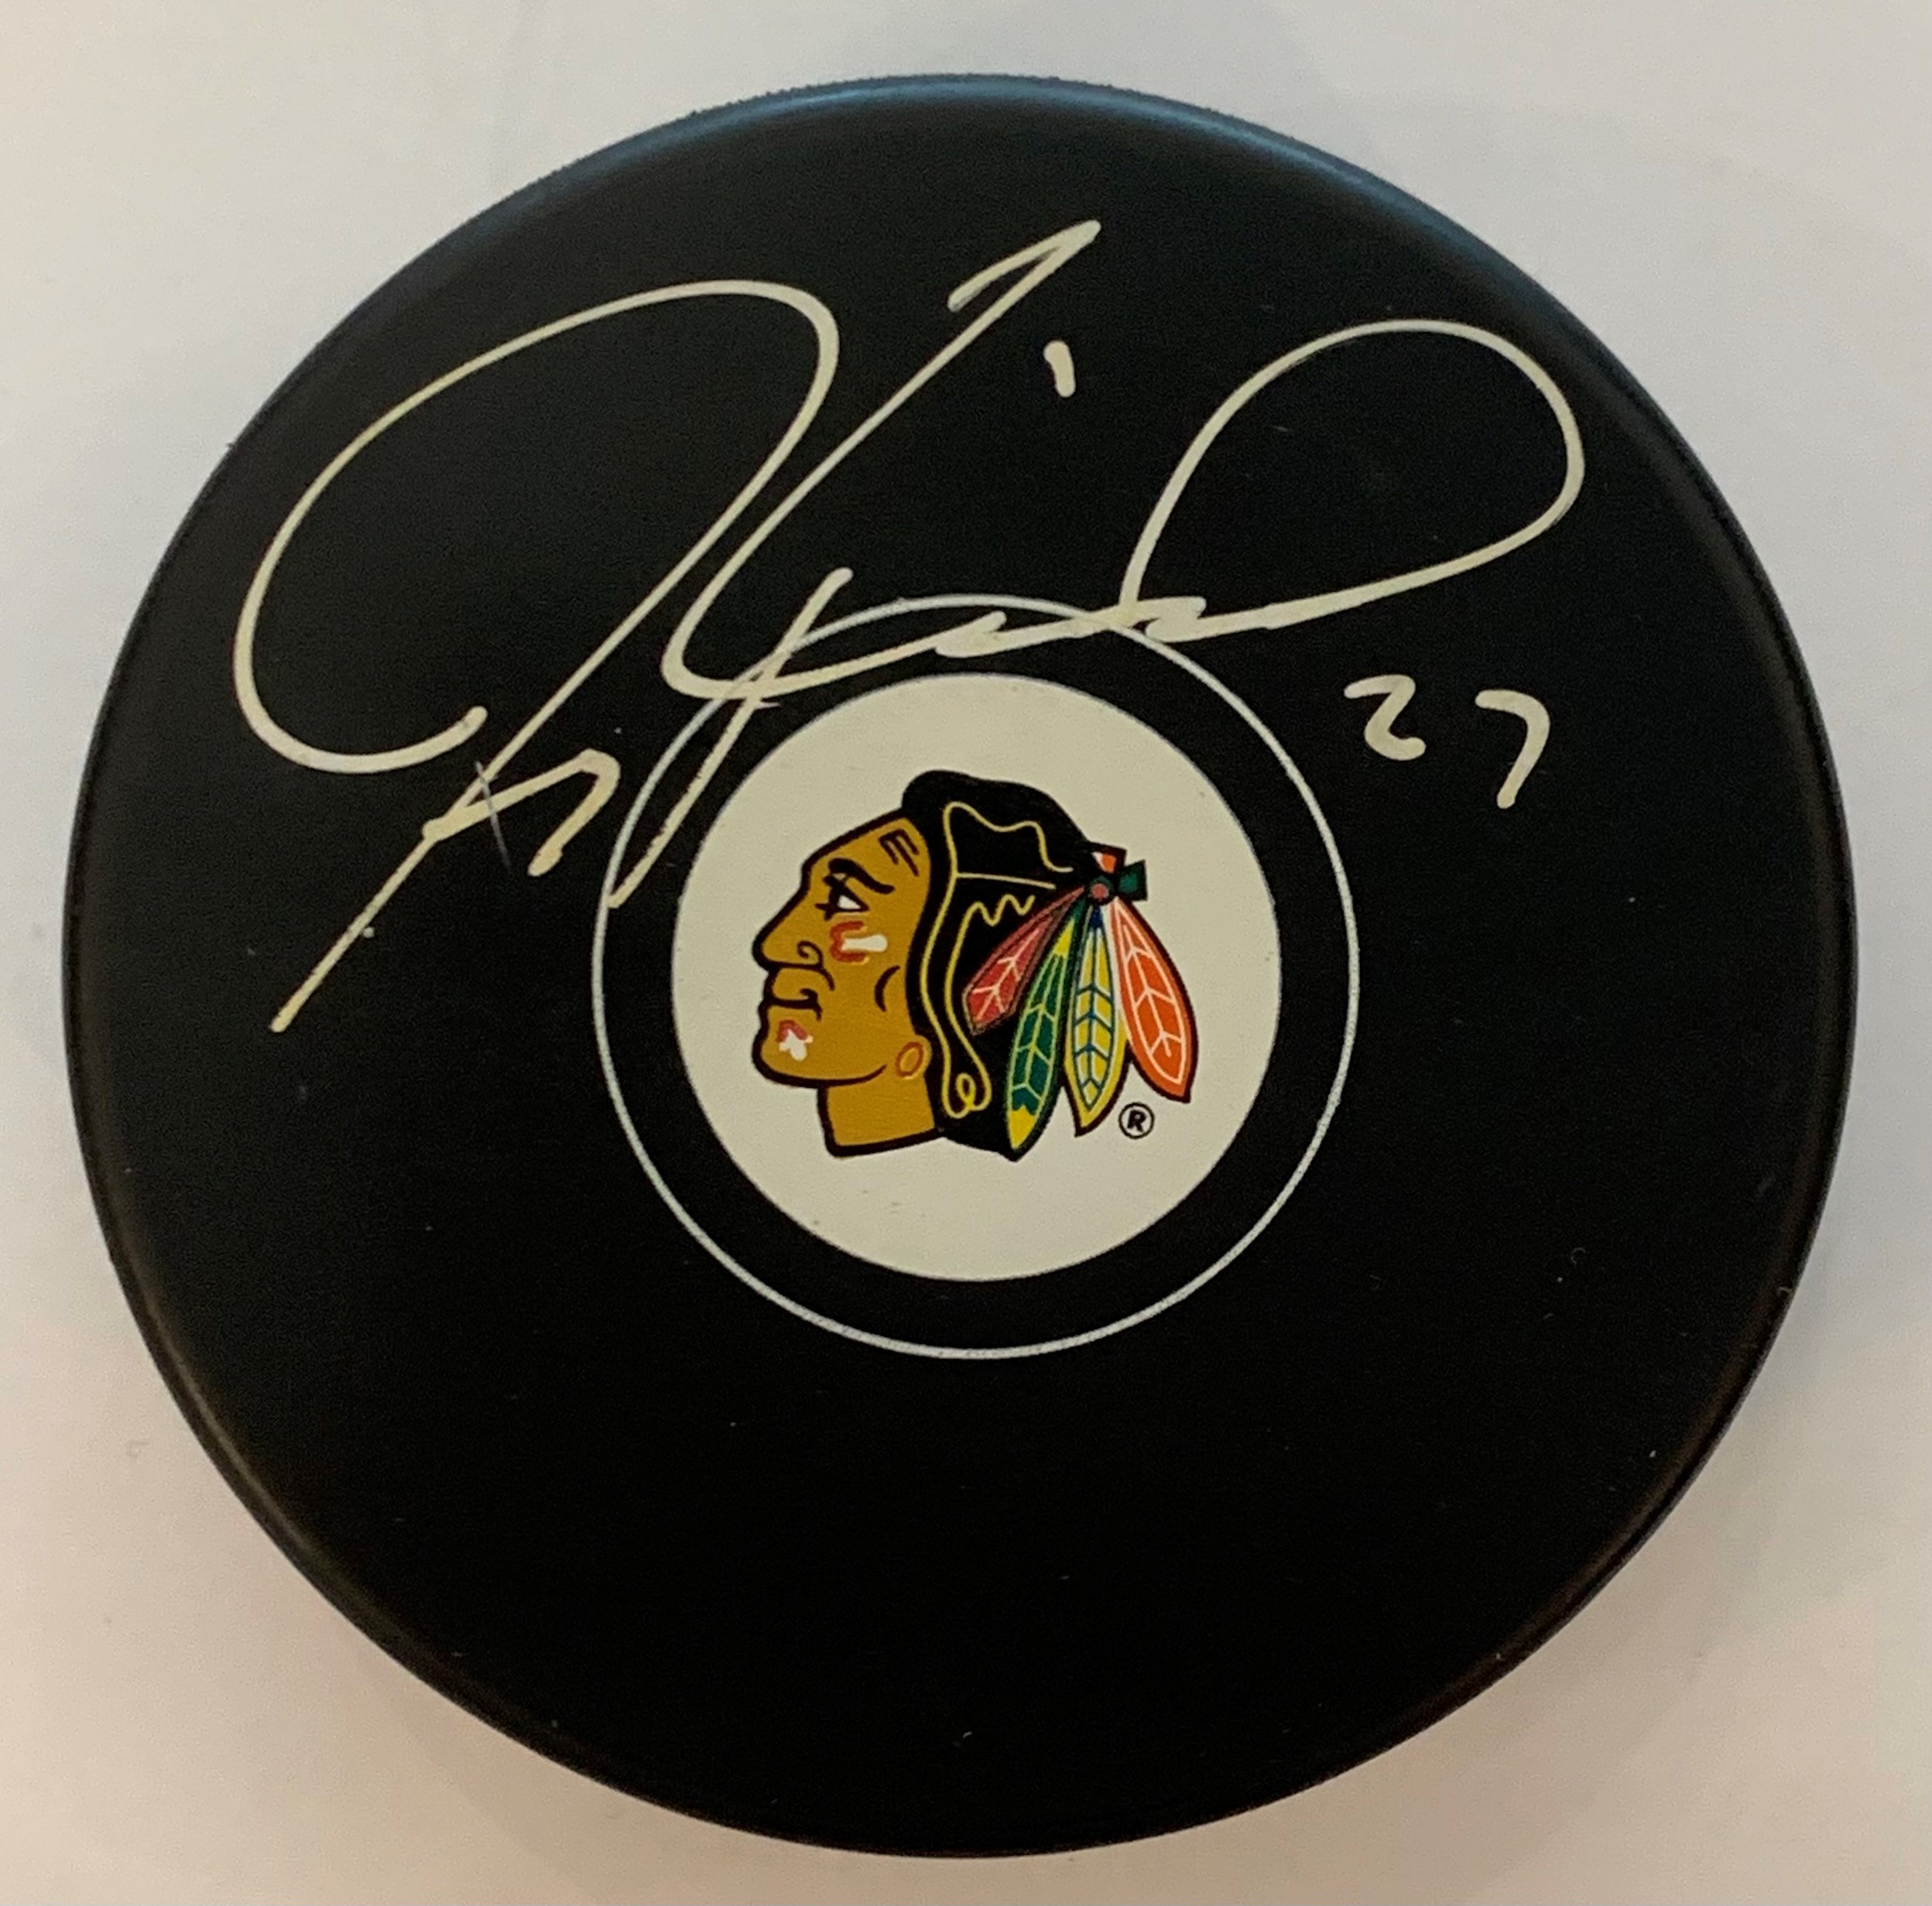 Jeremy Roenick Autographed Chicago Blackhawks Puck - The Autograph Source